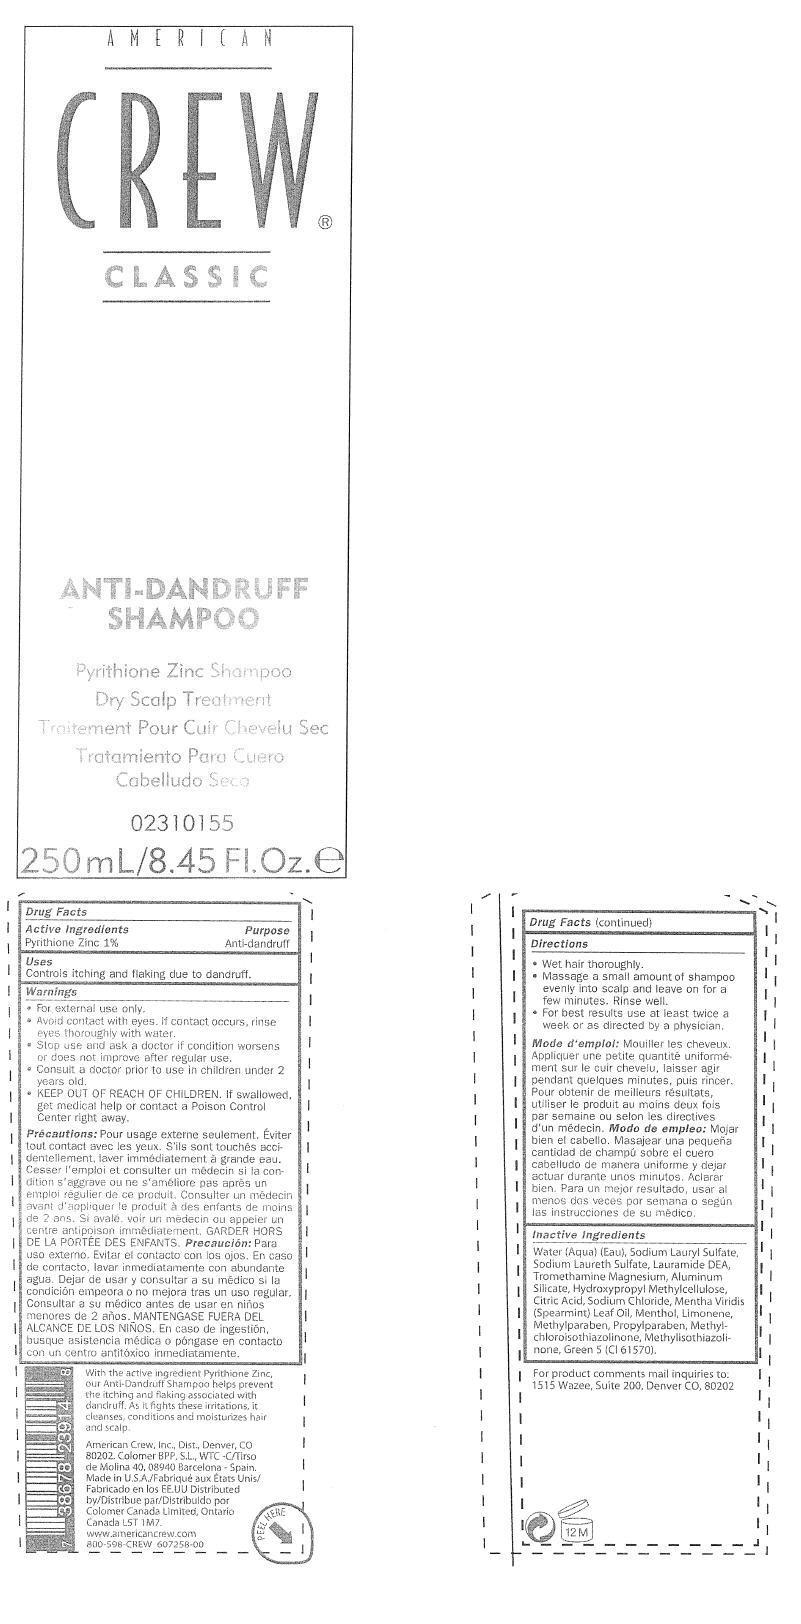 PRINCIPAL DISPLAY PANEL - 250 mL bottle label